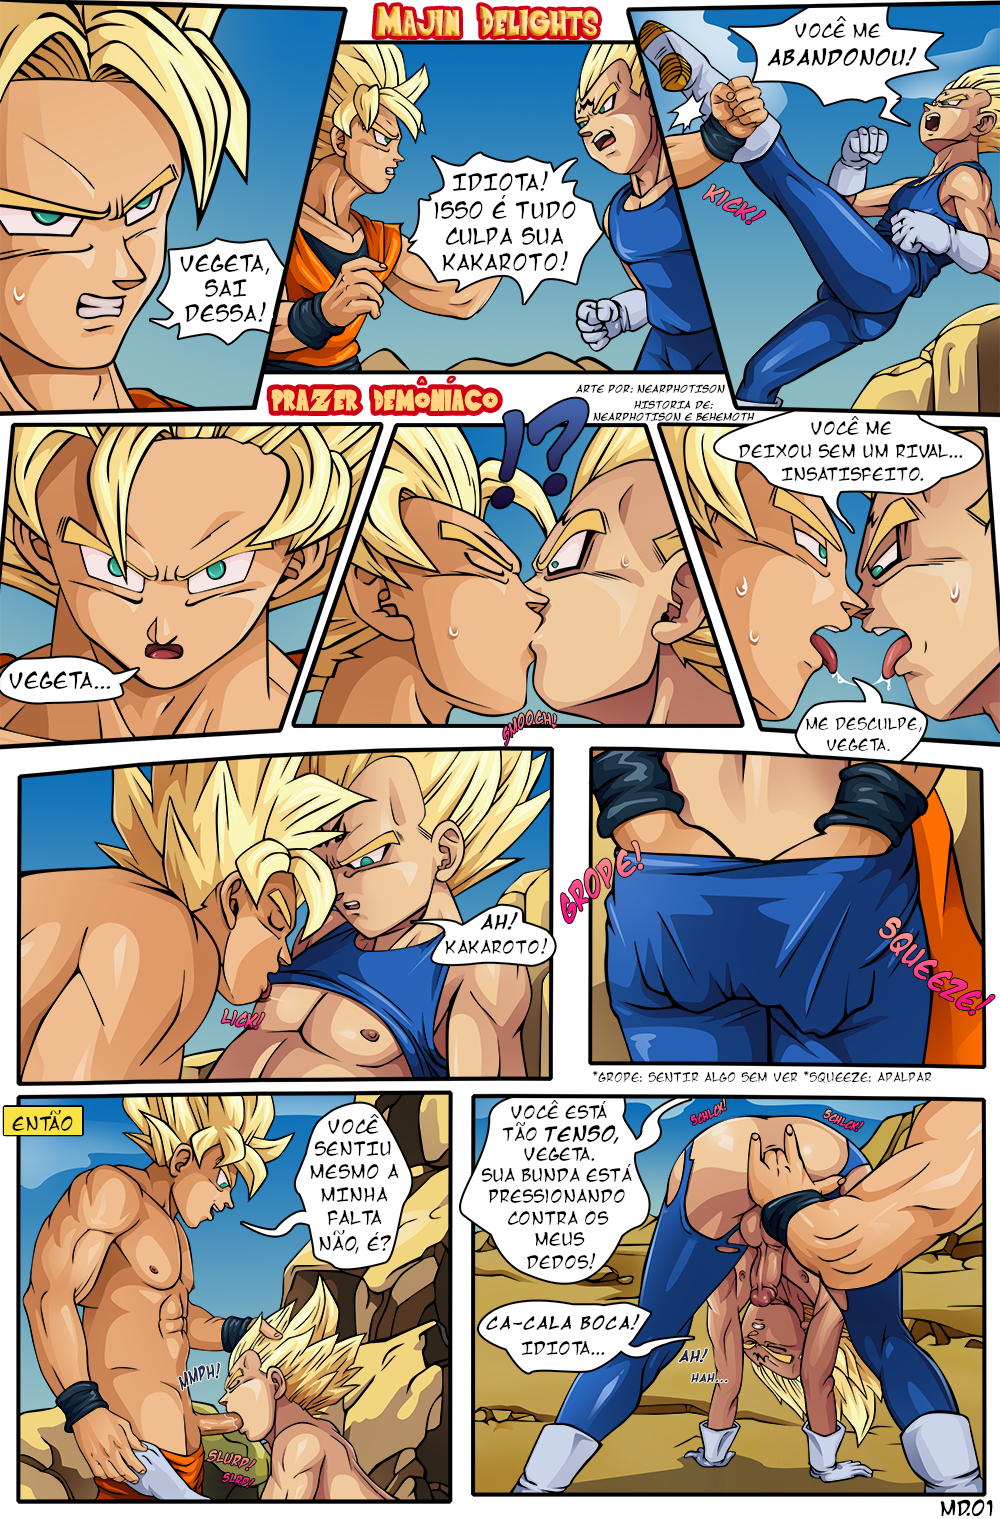 Goku and vegeta naked